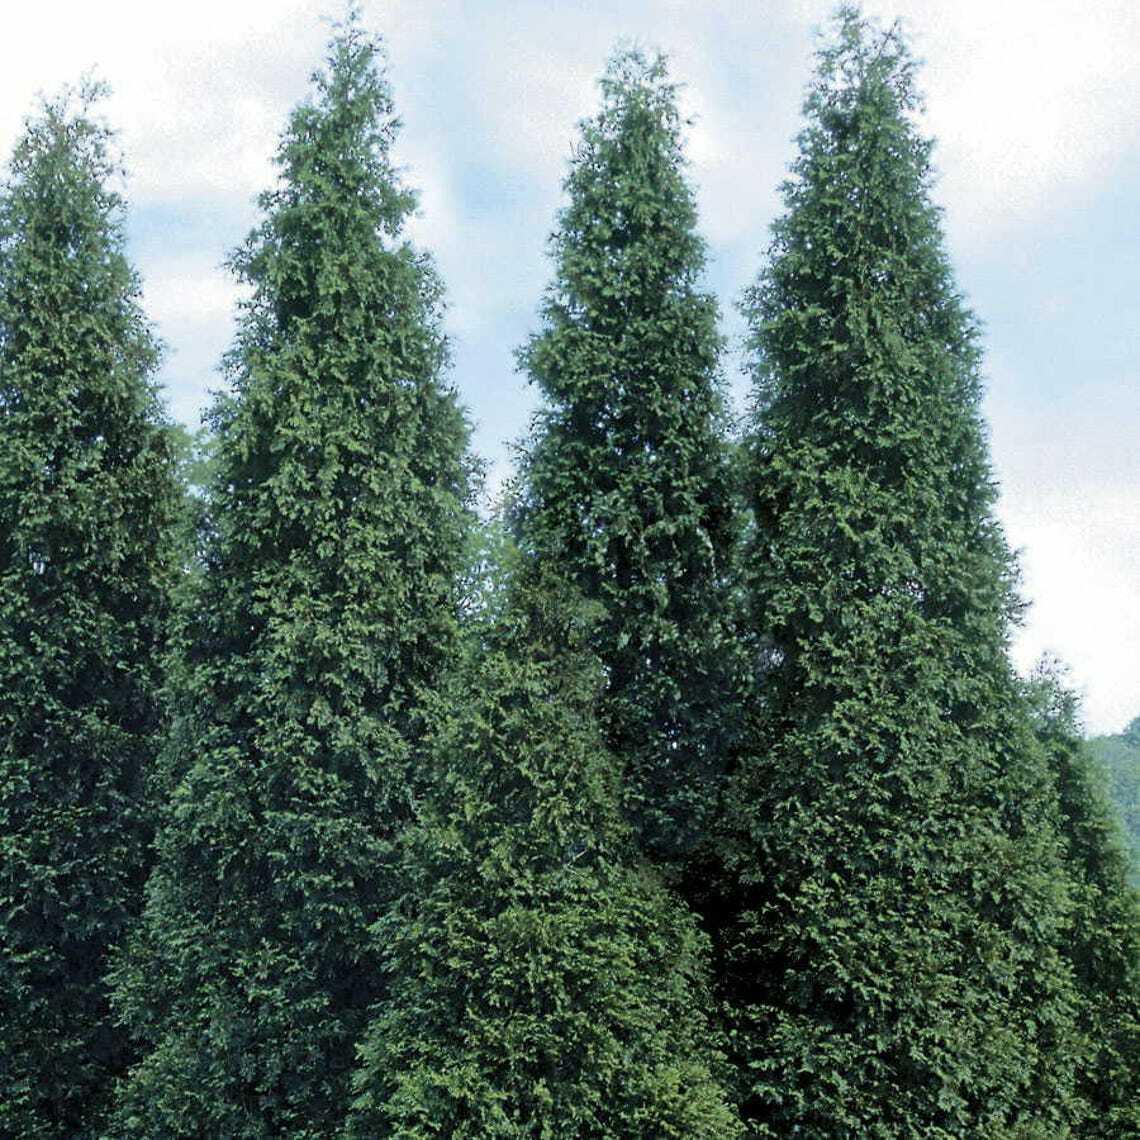 50 Thuja Green Giant Arborvitae Trees/Shrubs - 12-16" Tall Live Plants - 3" Pots - The Nursery Center